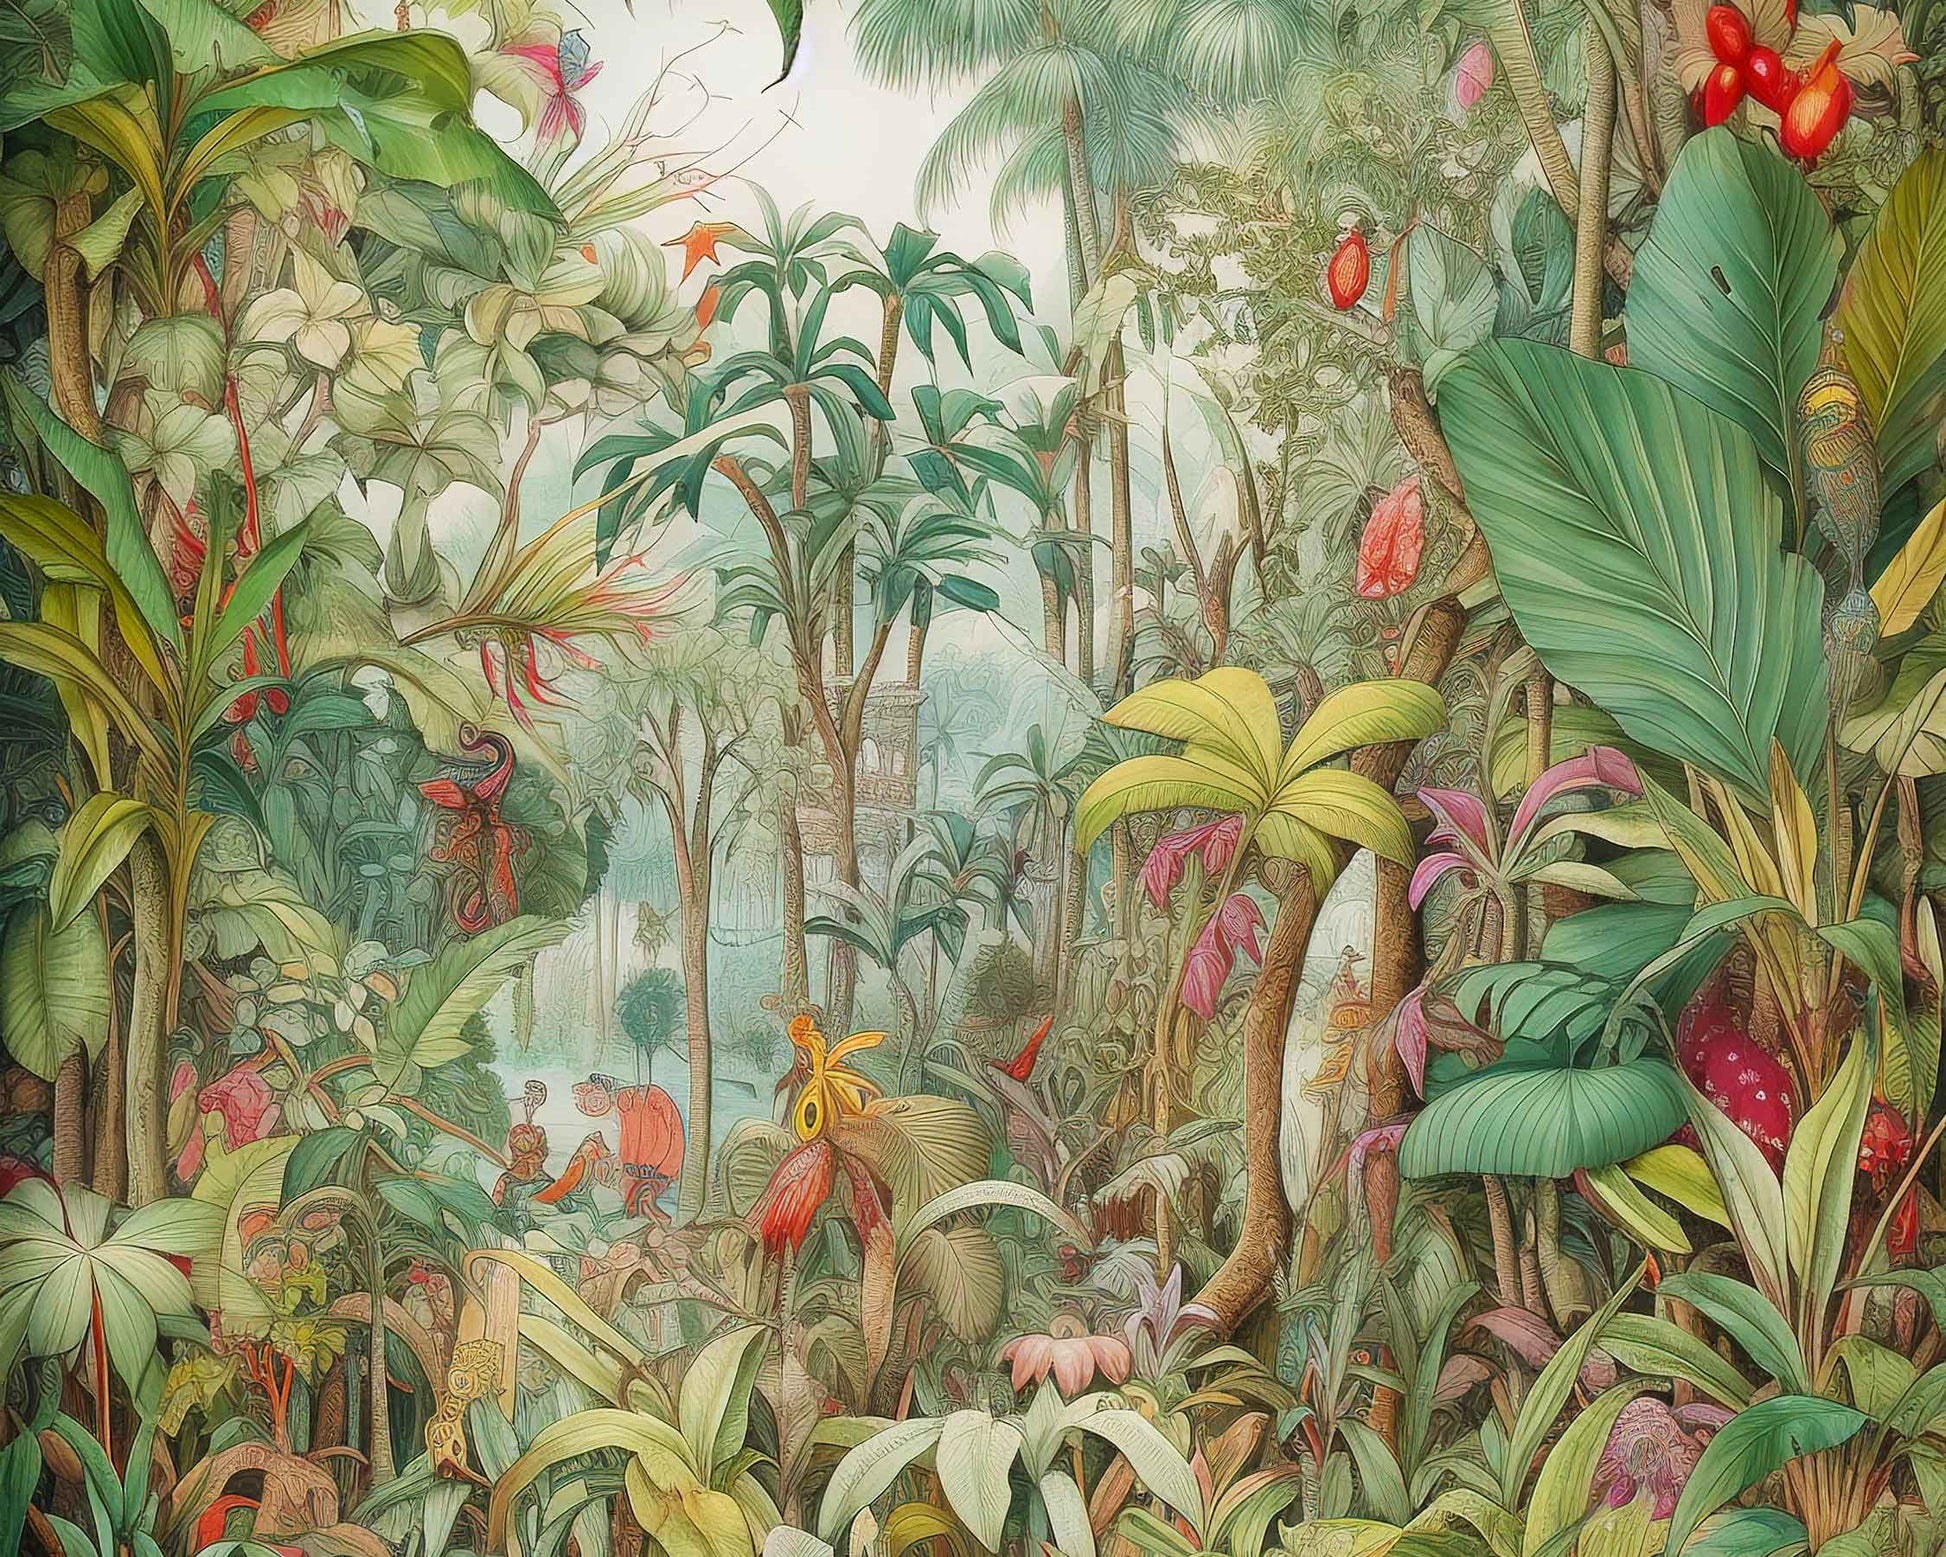 Framed Image of Vintage Jungle Victorian Botanical Wall Art, Maximalist Prints